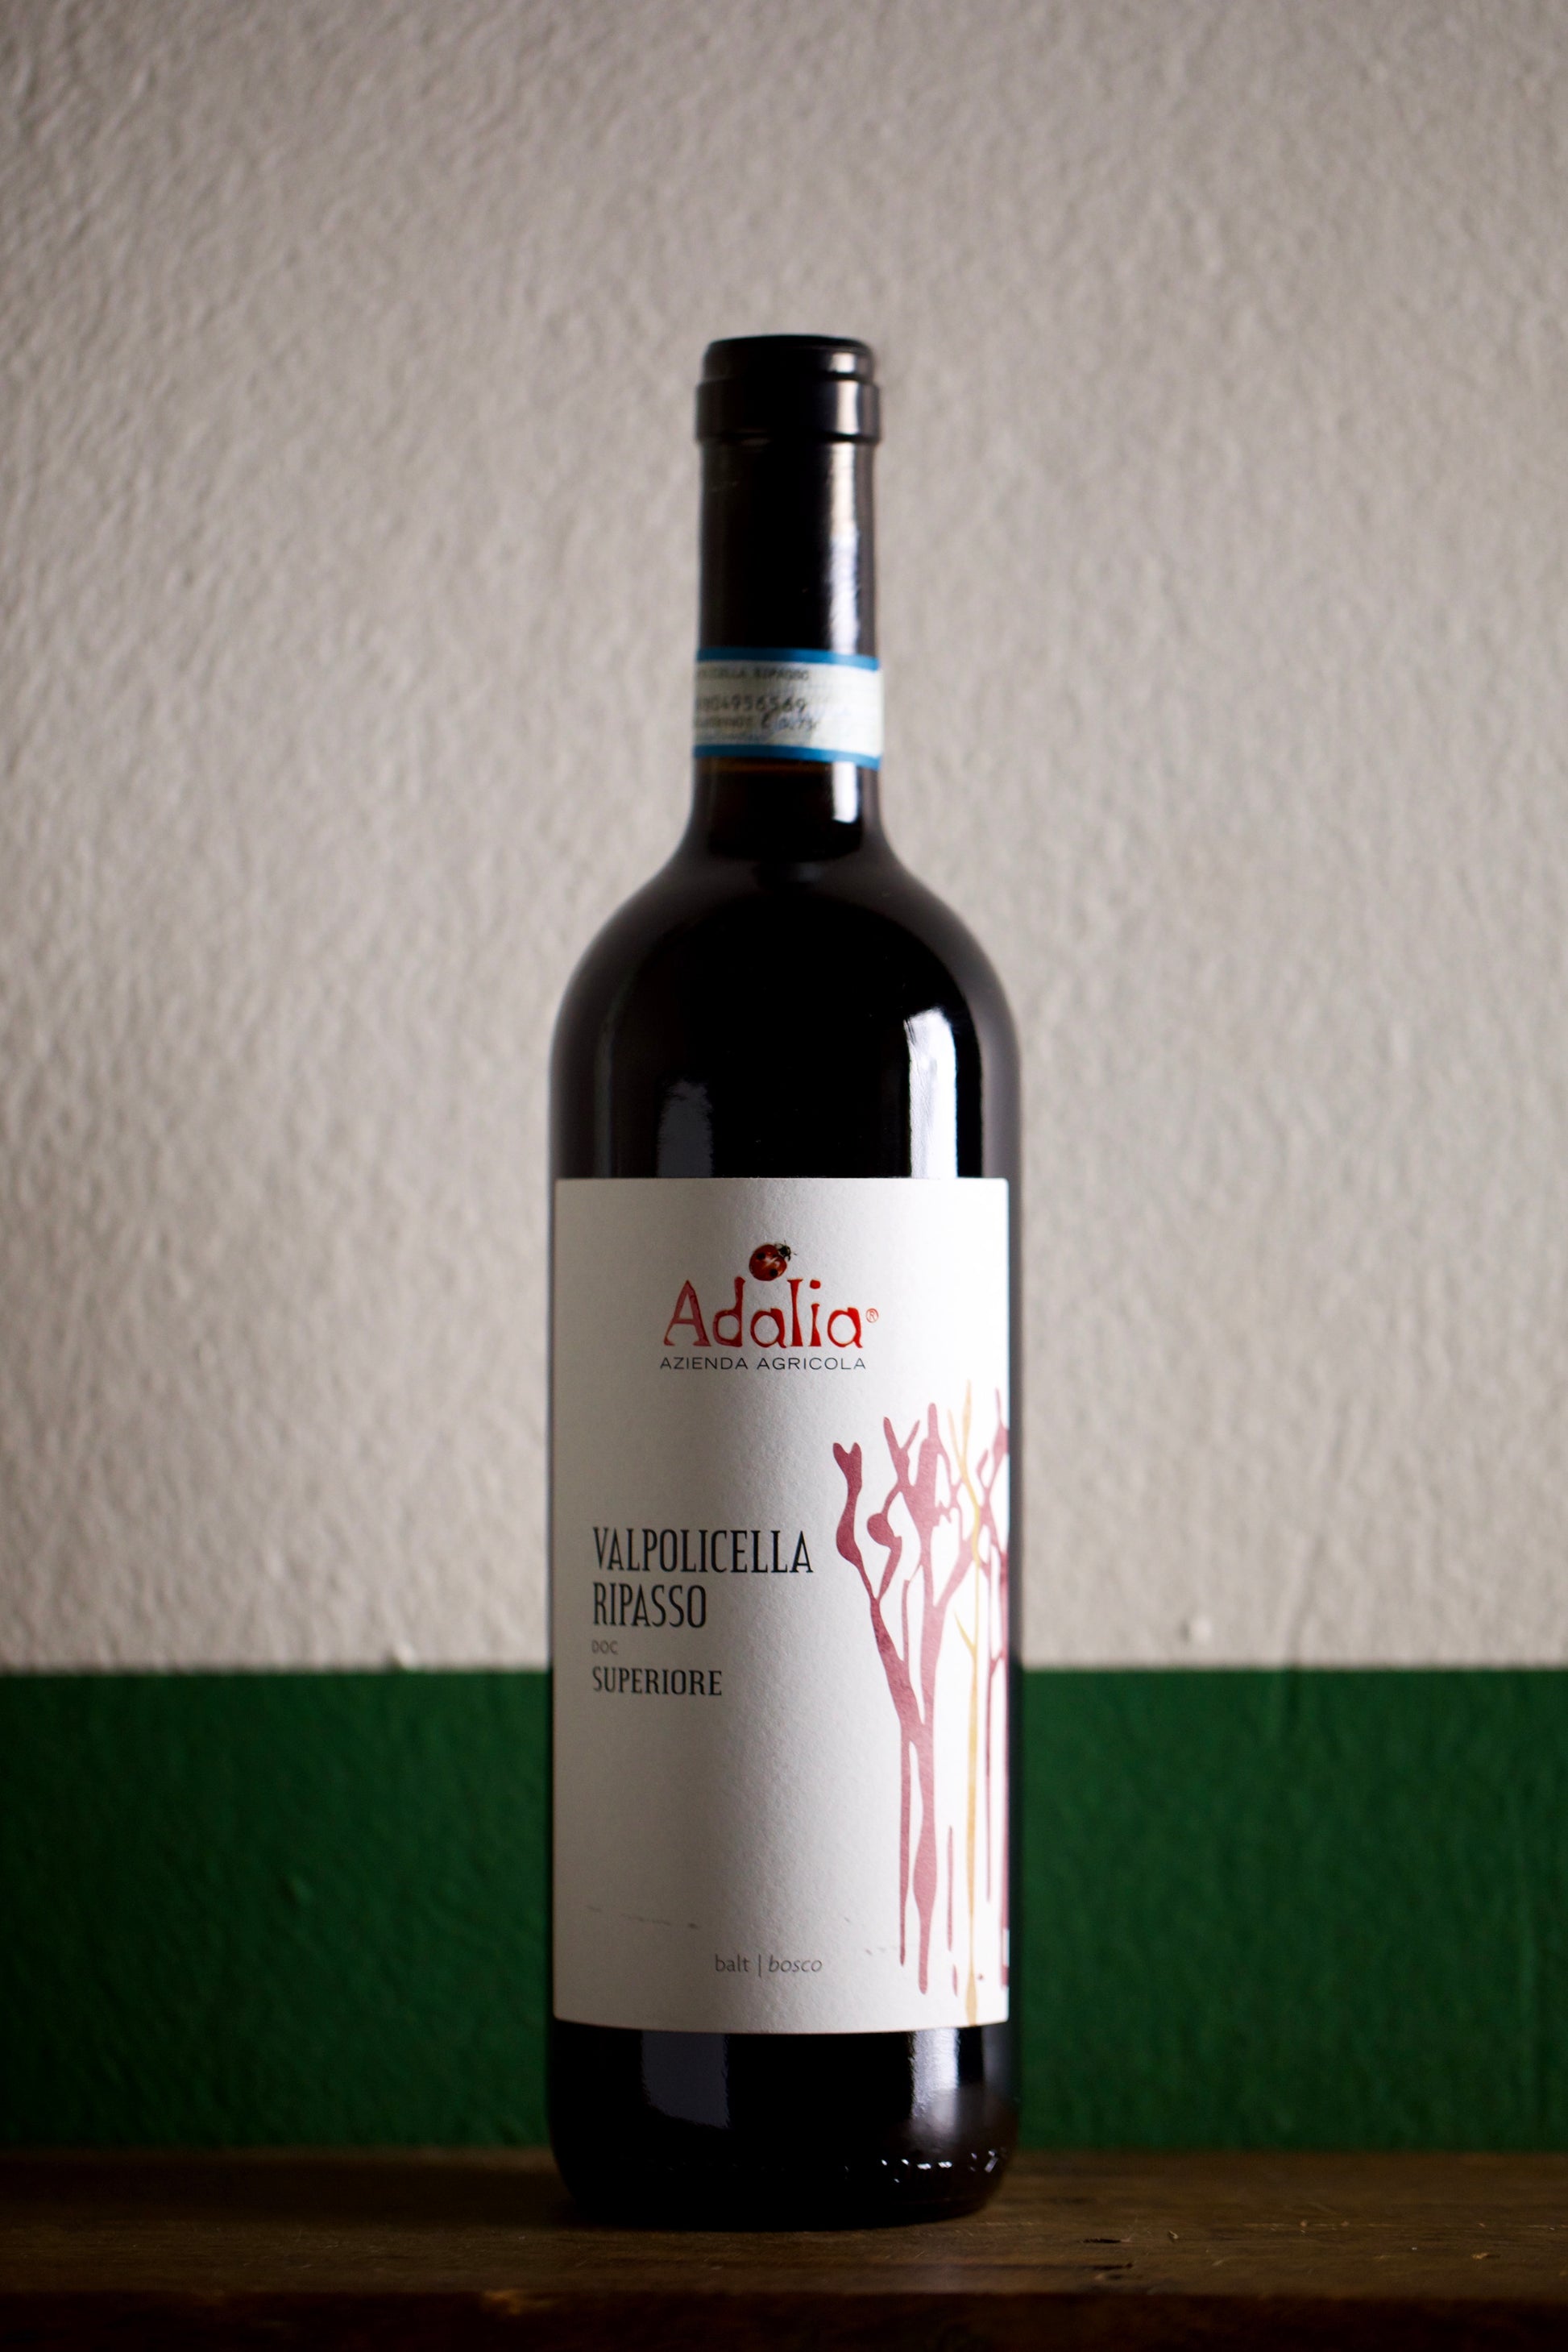 Bottle of Adalia Valpolicella Ripasso Superiore 2017